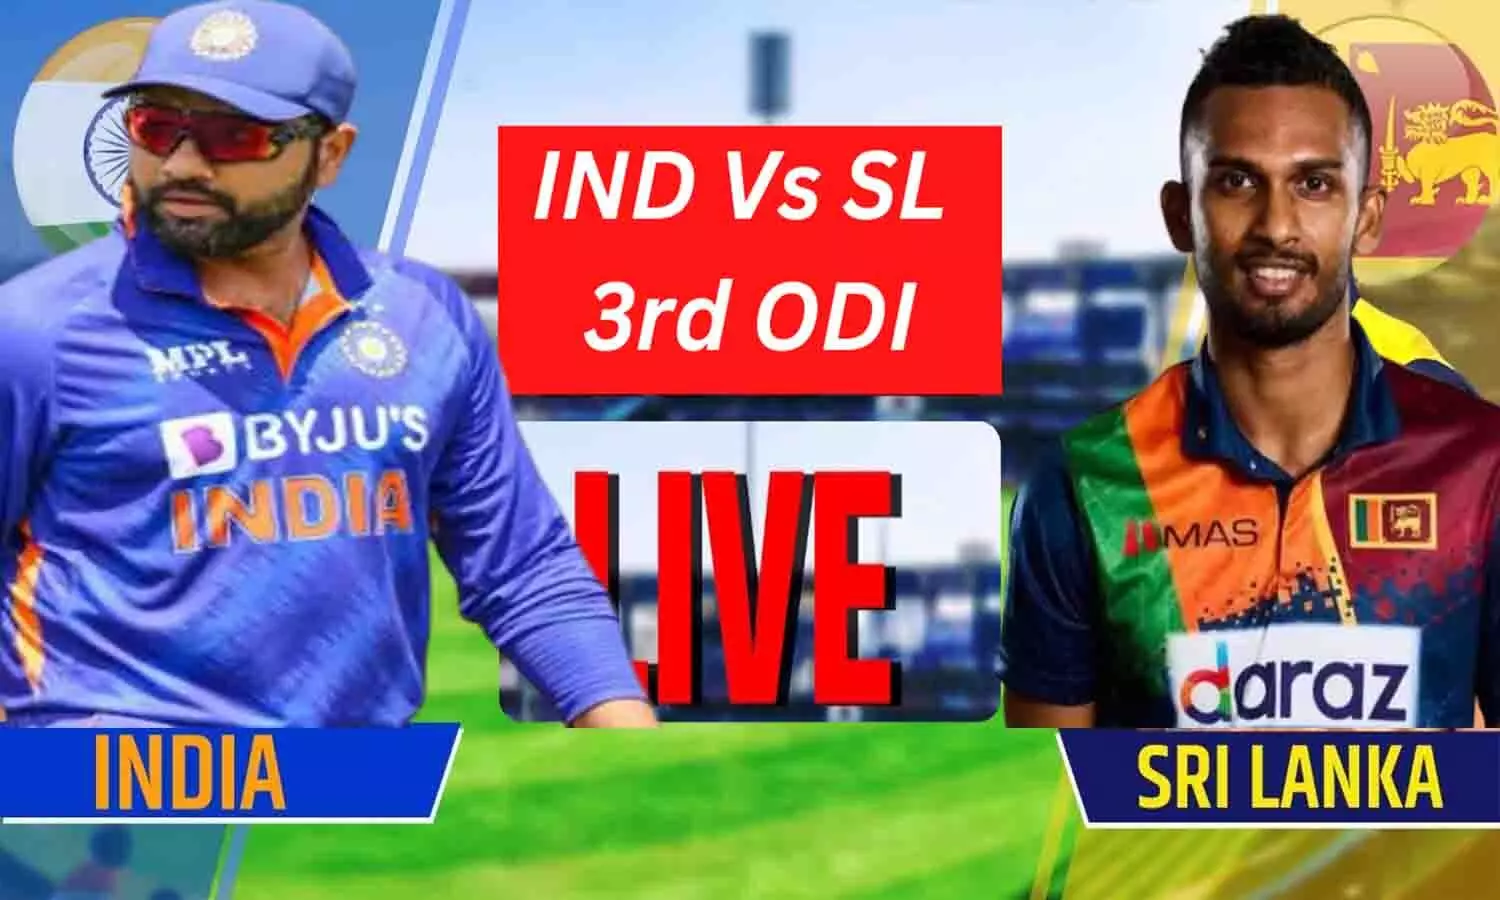 IND vs SL 3rd ODI Live Score